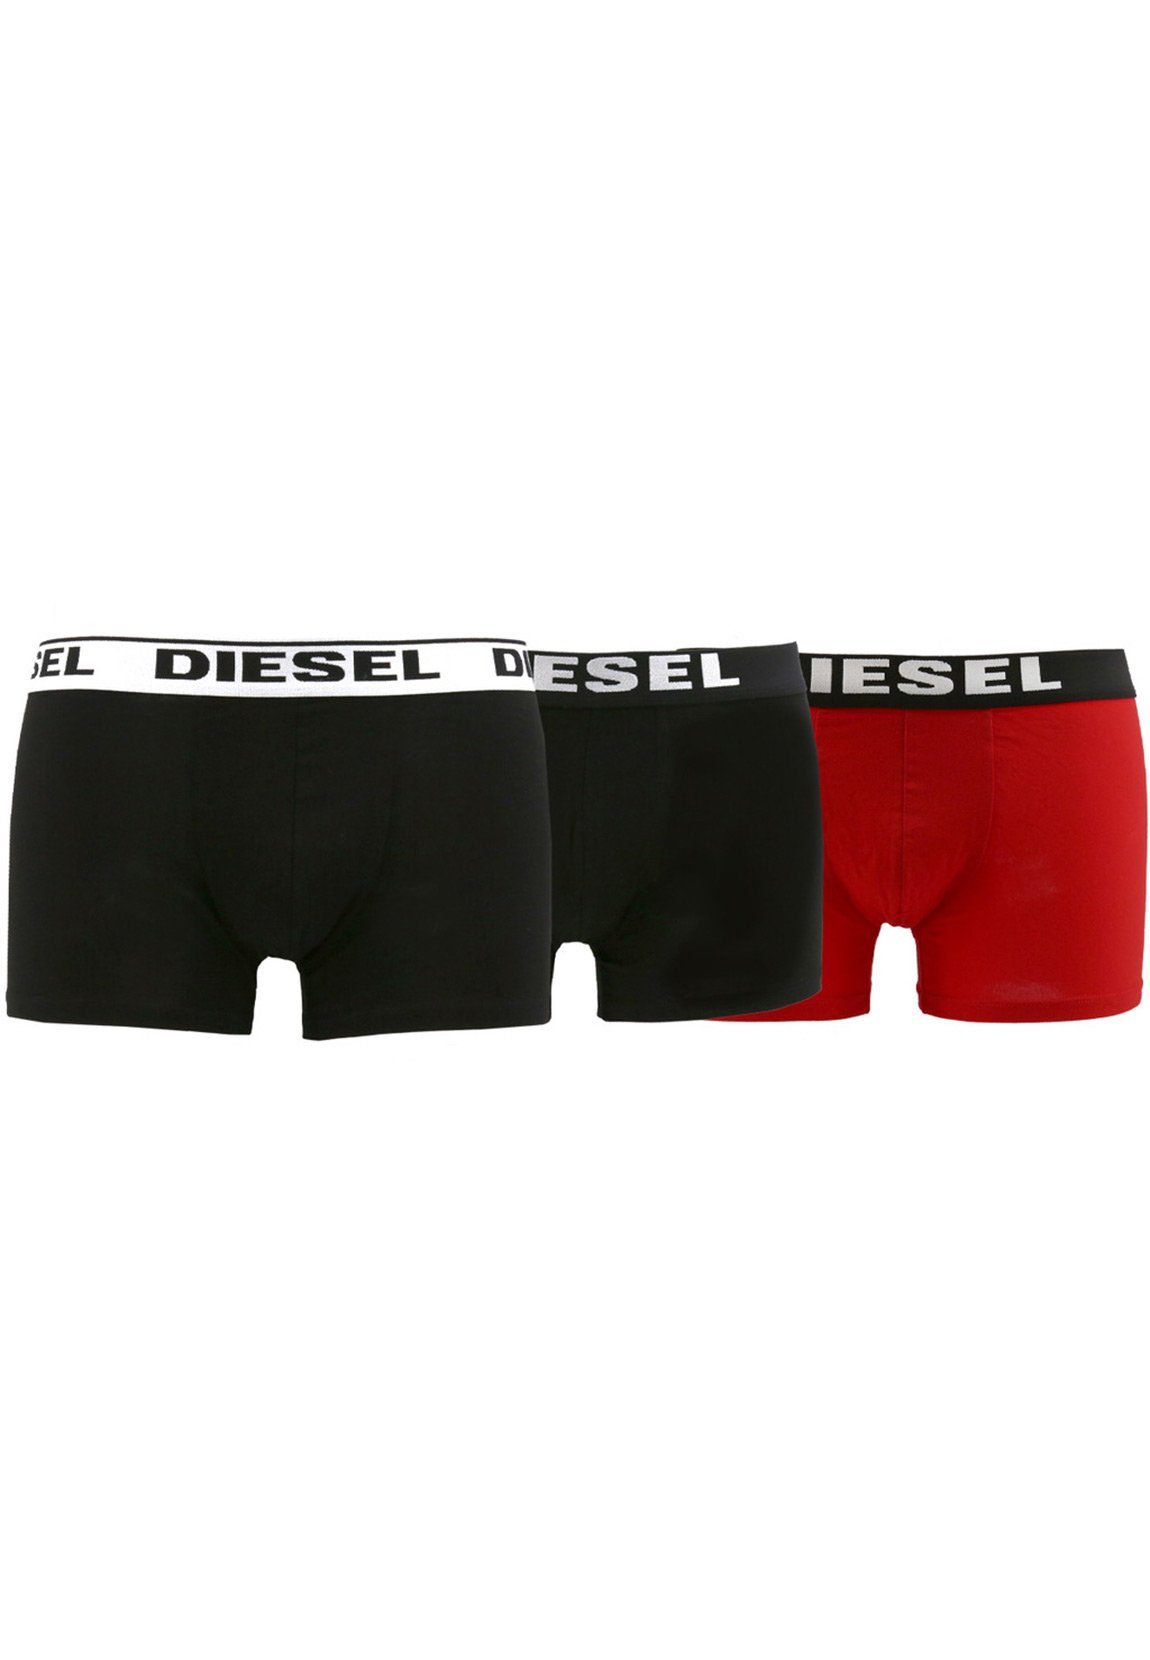 Diesel Boxershorts Diesel Herren Boxershorts Dreierpack KORY RIAYC E5037 Schwarz Rot